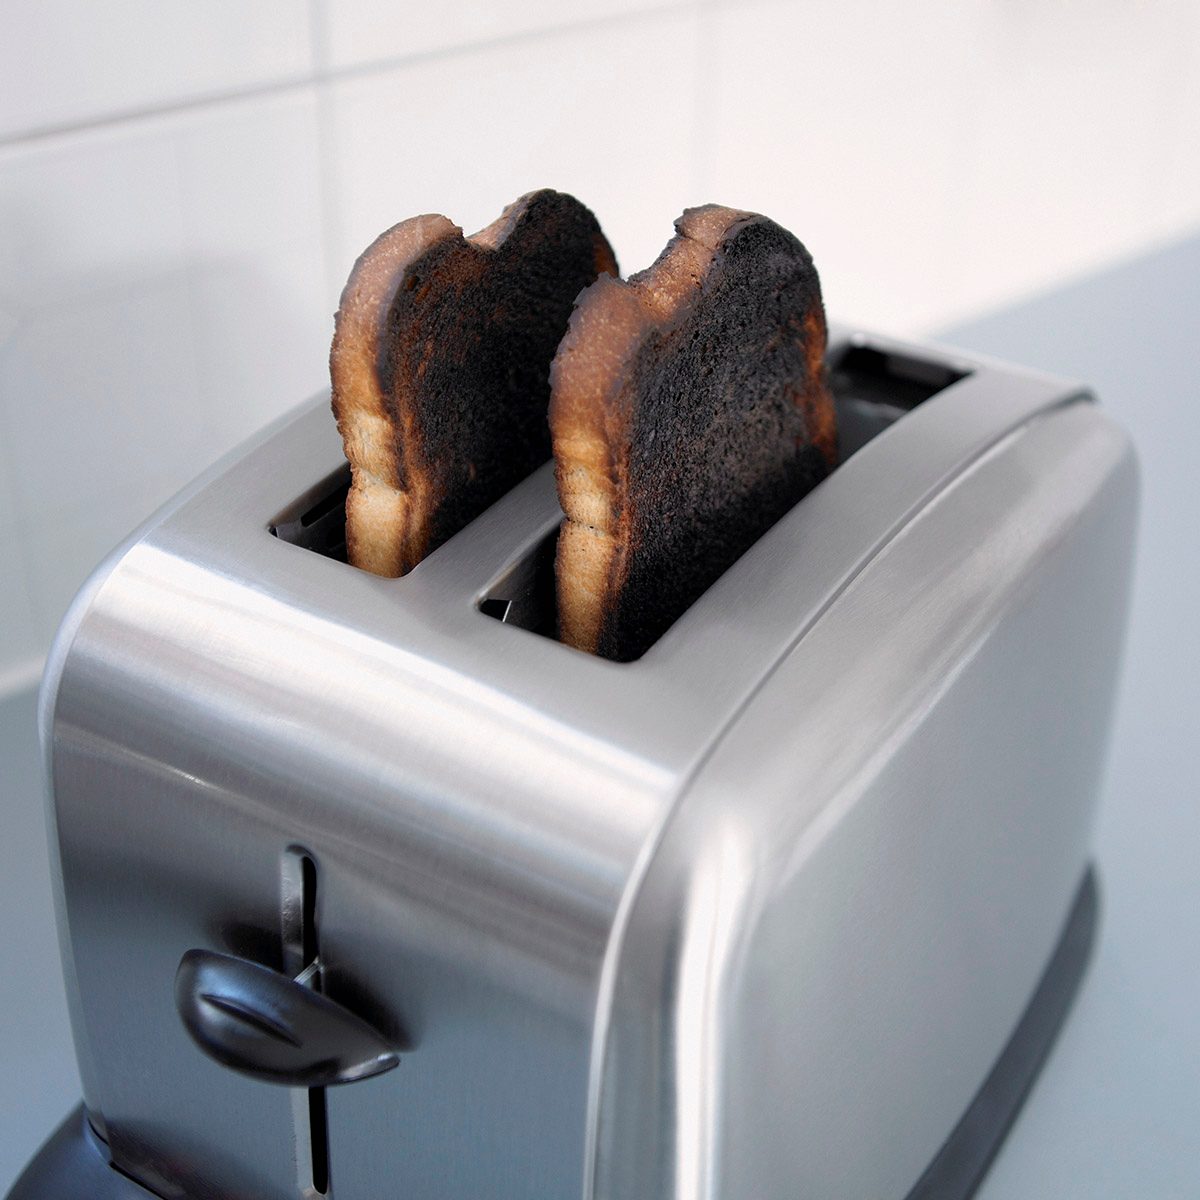 https://www.tasteofhome.com/wp-content/uploads/2020/09/burnt-toast-in-toaster-90201394.jpg?fit=700%2C700